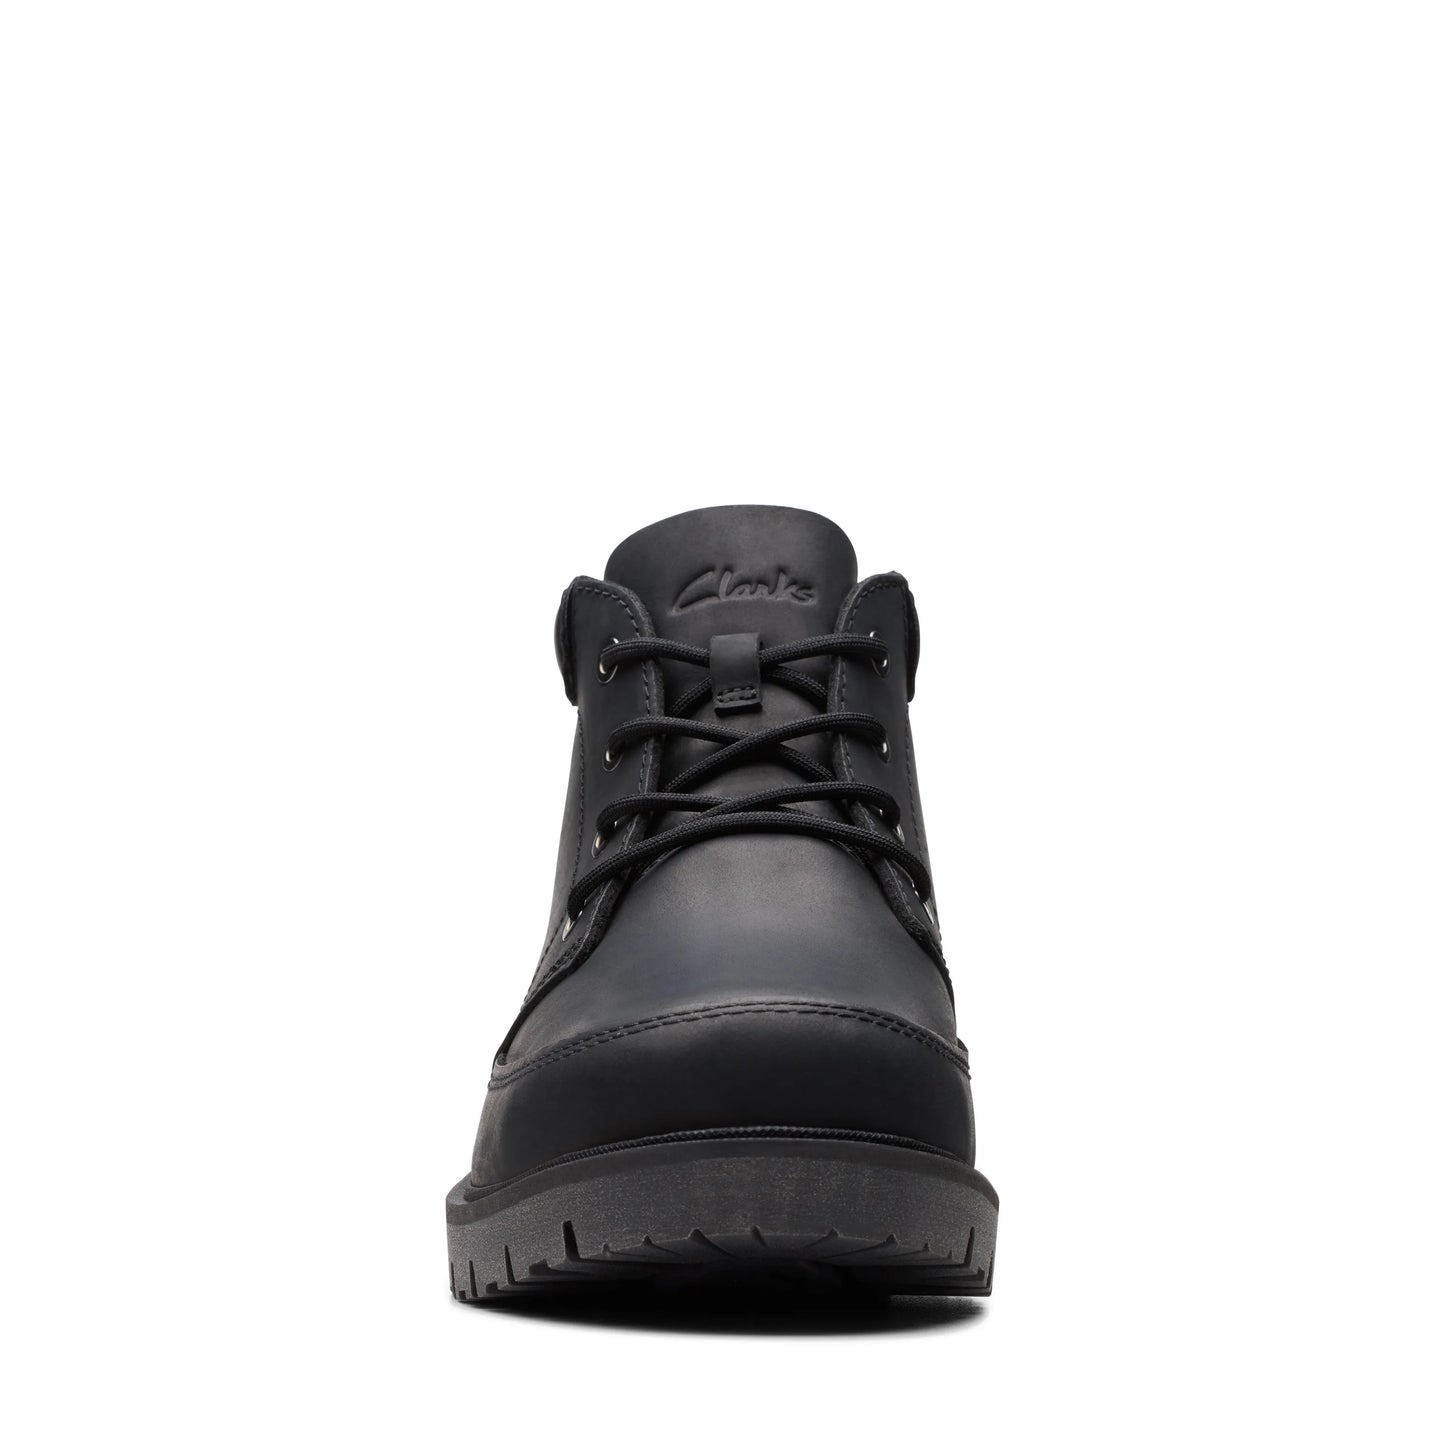 CLARKS | أحذية الكاحل للرجال | ROSSDALE MID BLACK LEATHER | أسود